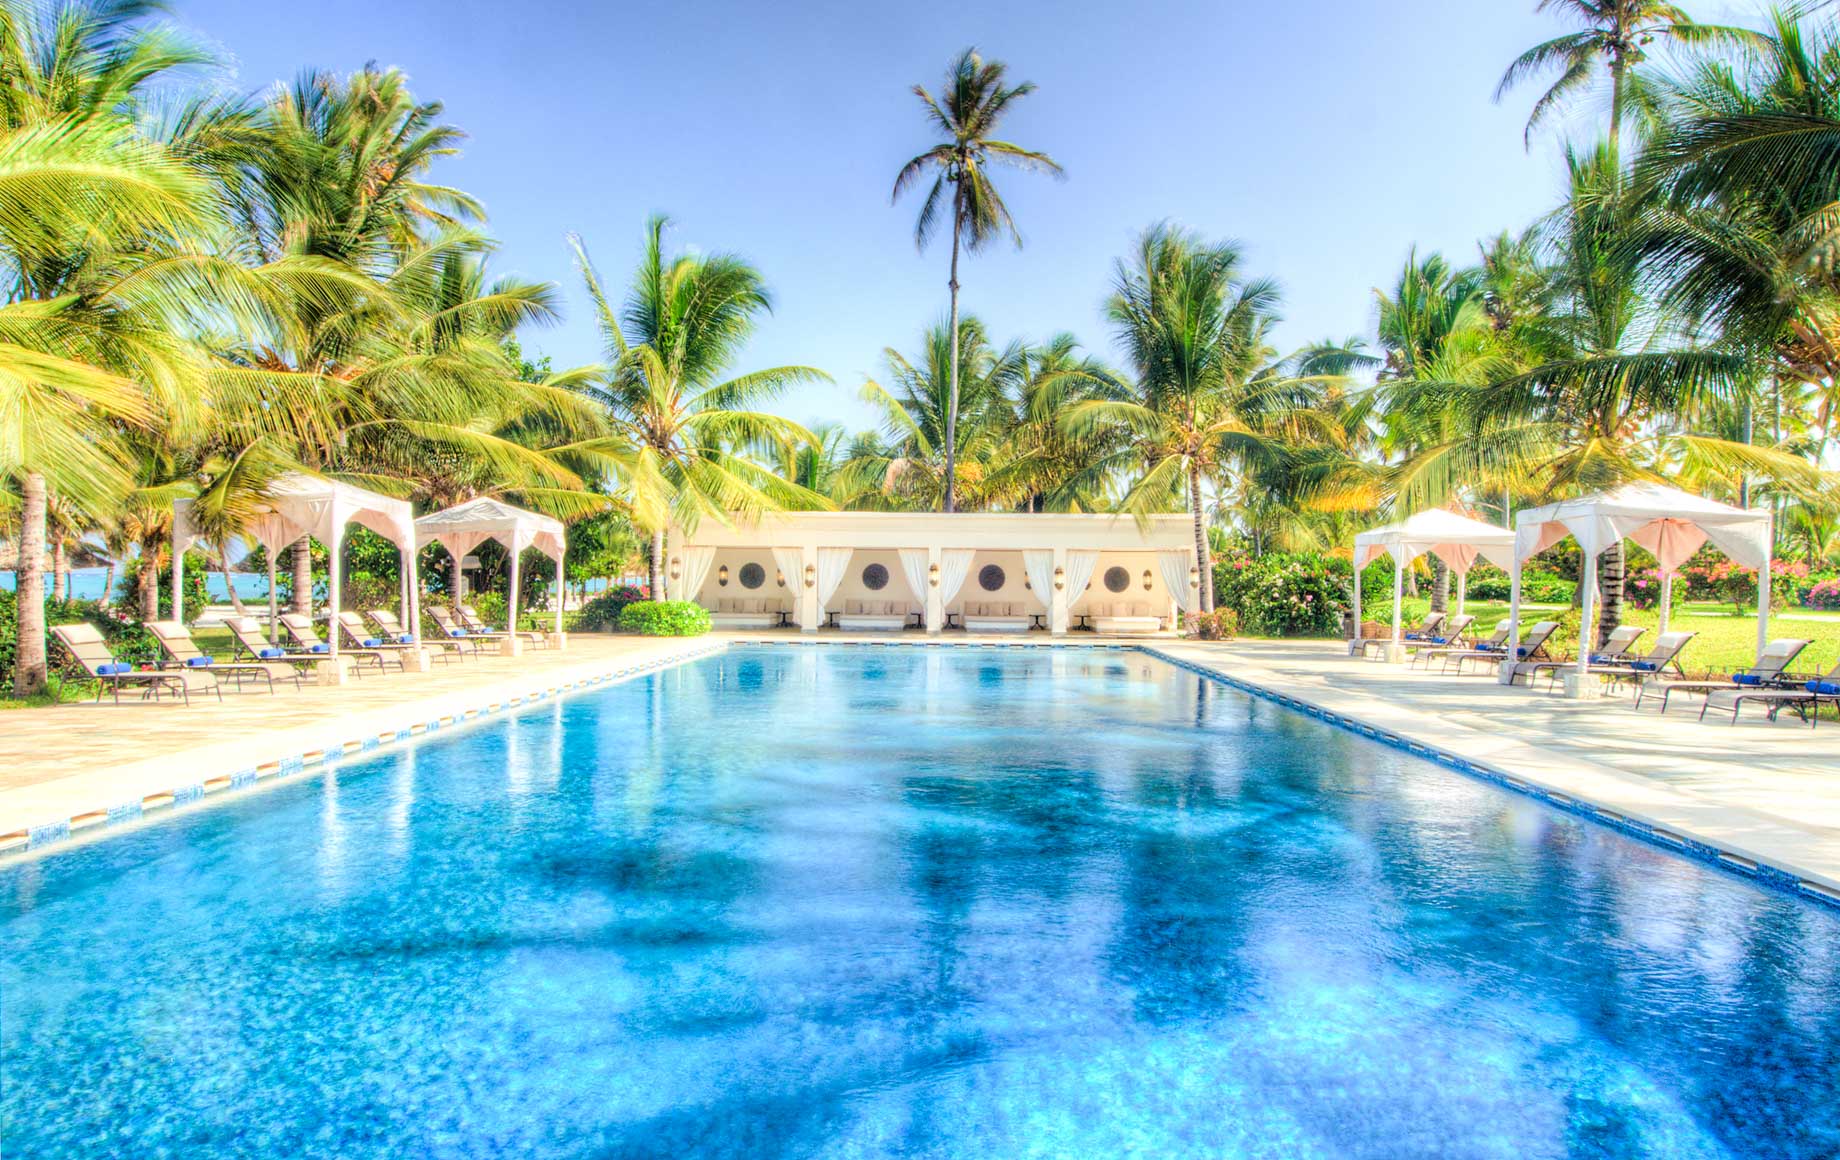 Outdoor pool area of Baraza Resort & Spa